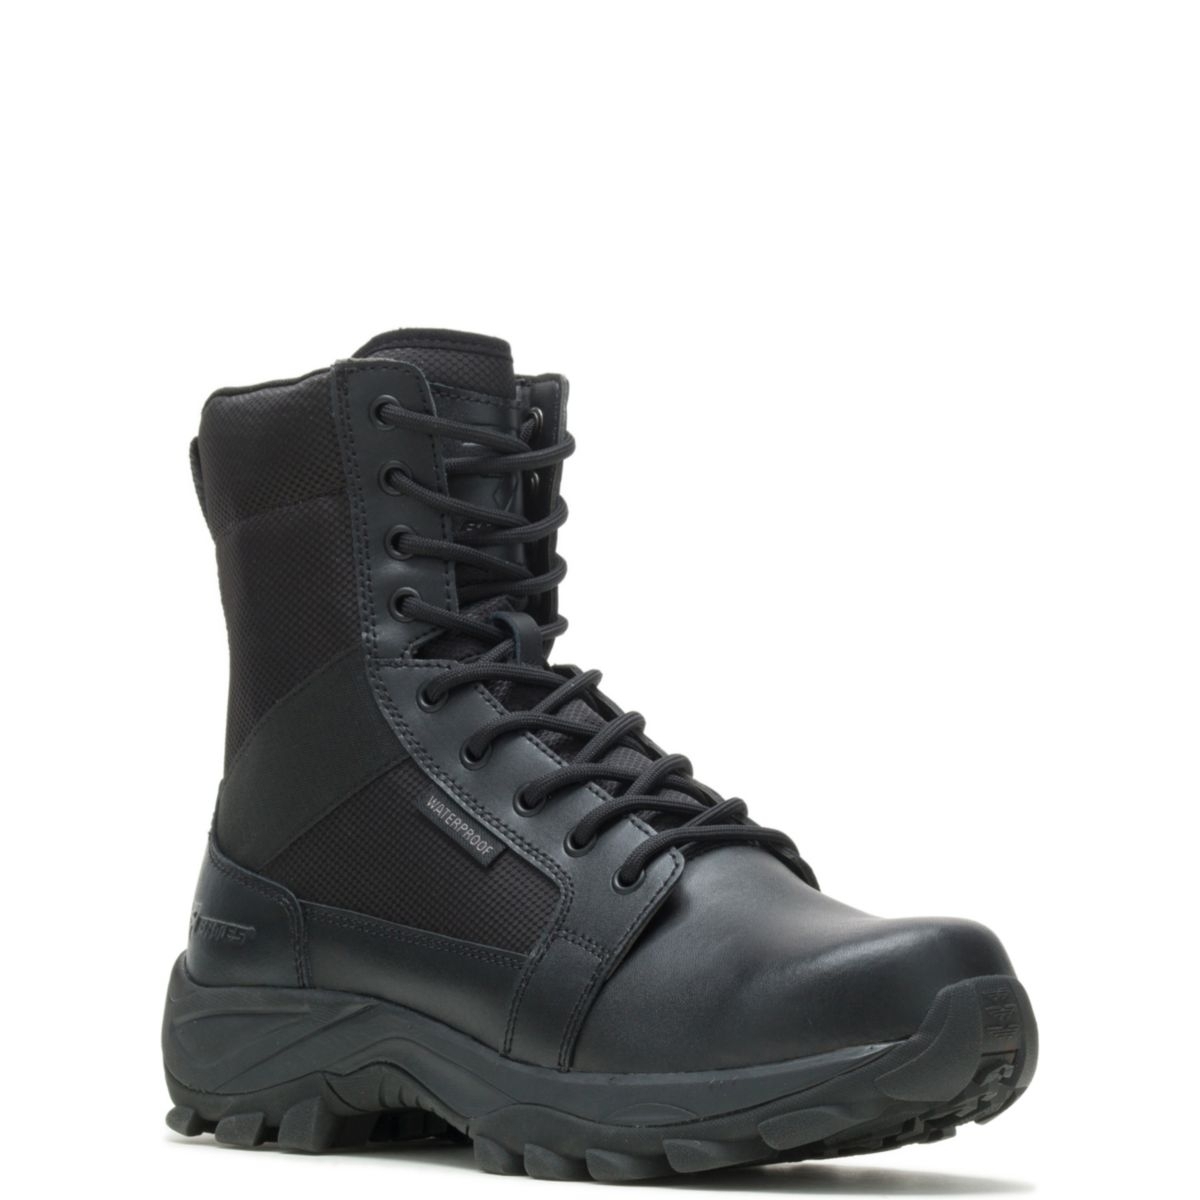 Bates Men's Fuse 8-inch Side Zip Waterproof Boot Black - E06508 BLACK - BLACK, 12